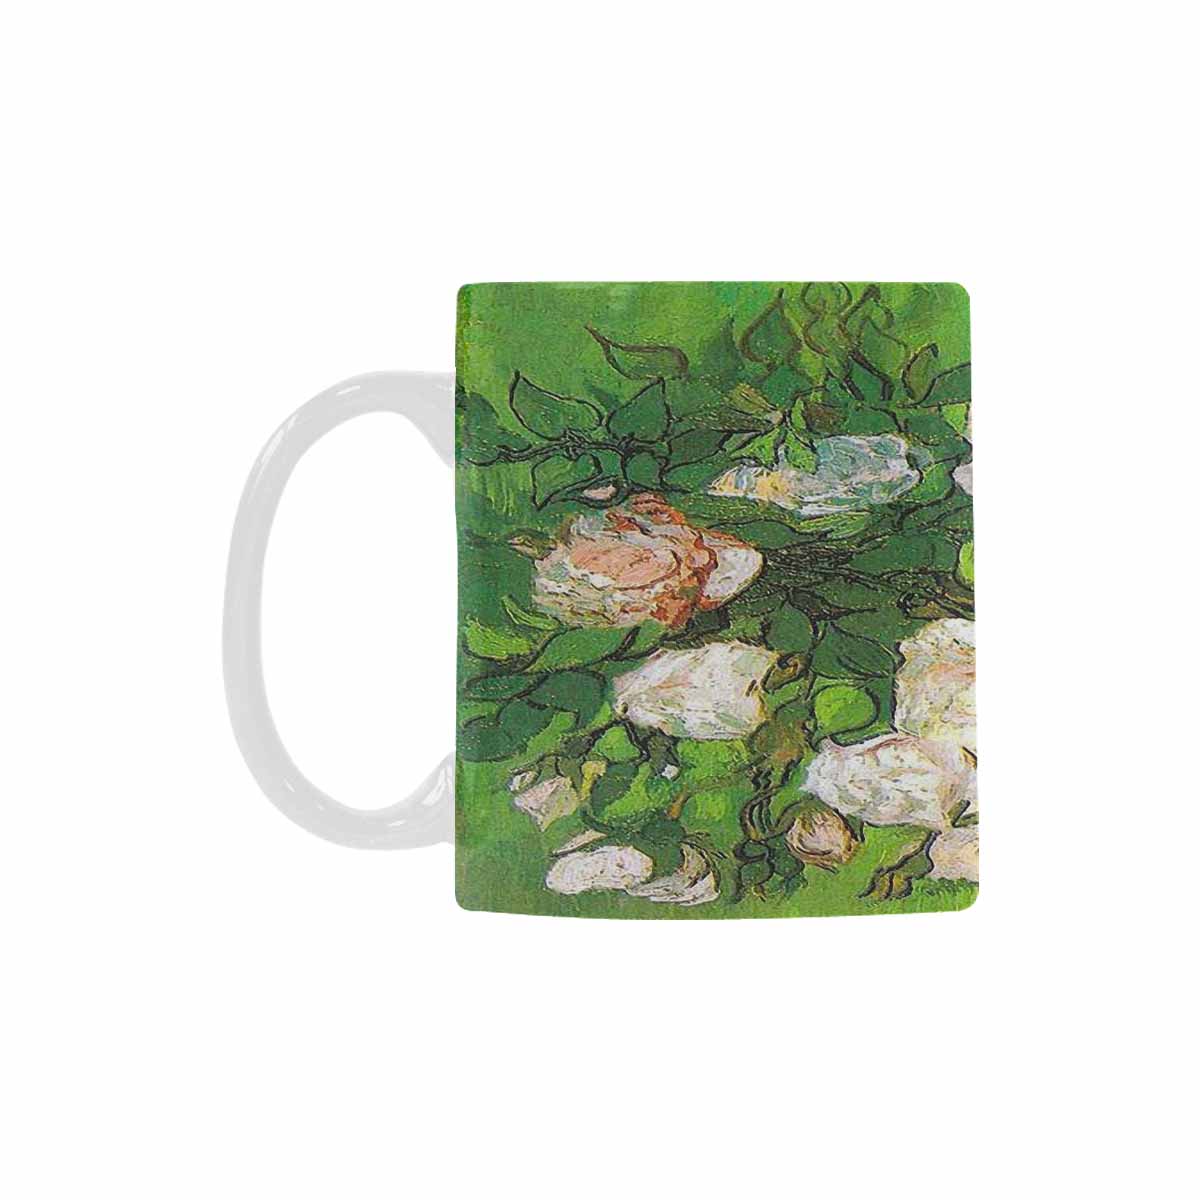 Vintage floral coffee mug or tea cup, Design 06